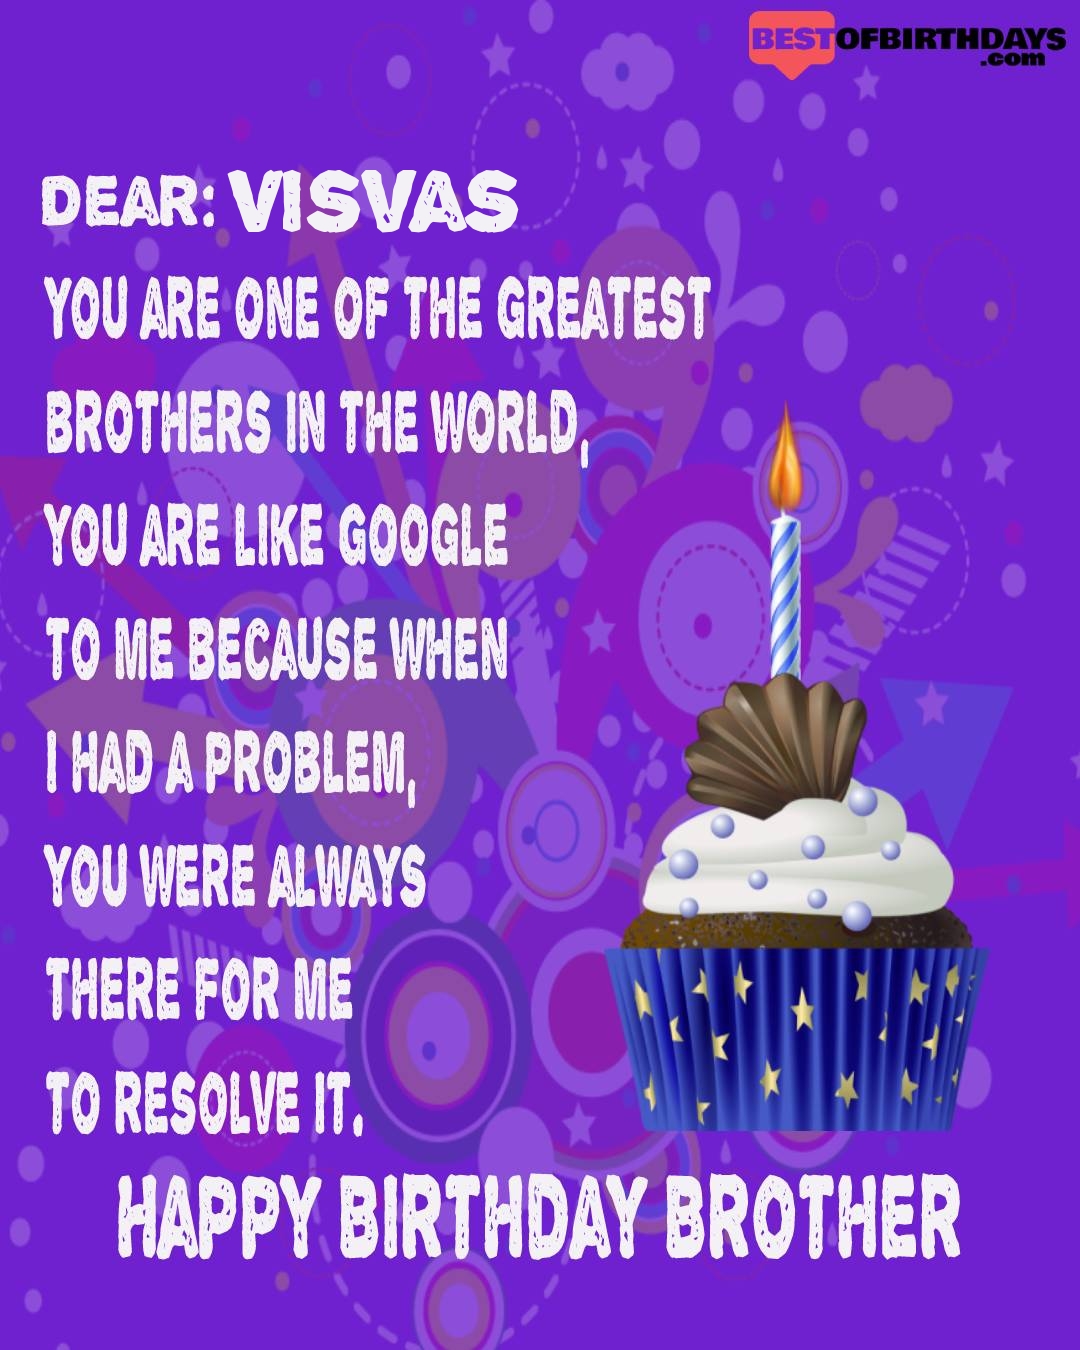 Happy birthday visvas bhai brother bro